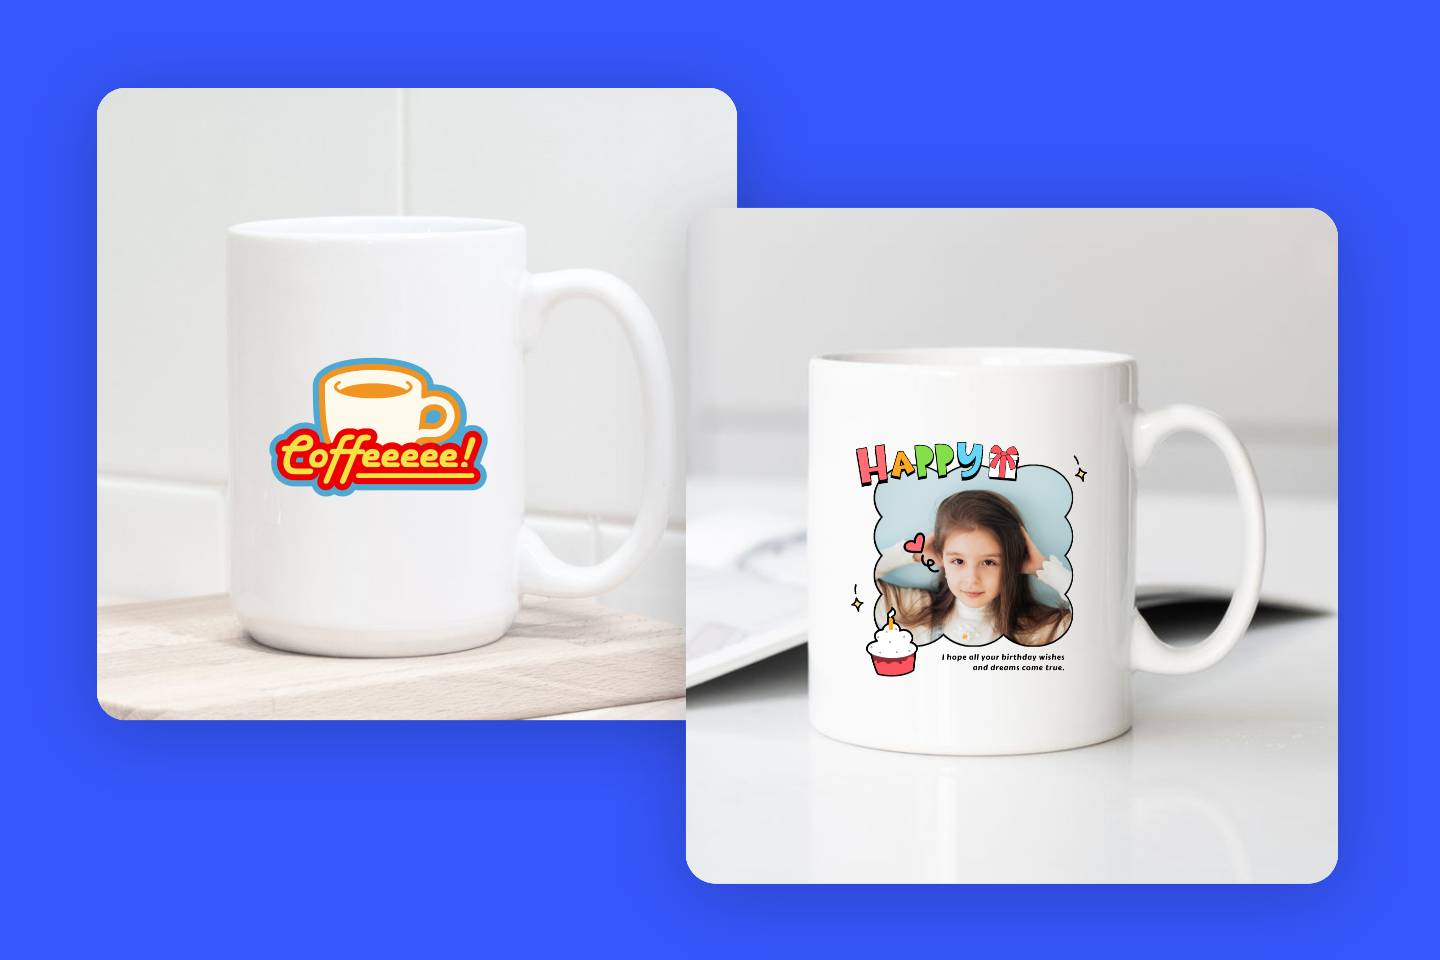 Cuffee sticker mug and girl image mug from fotor